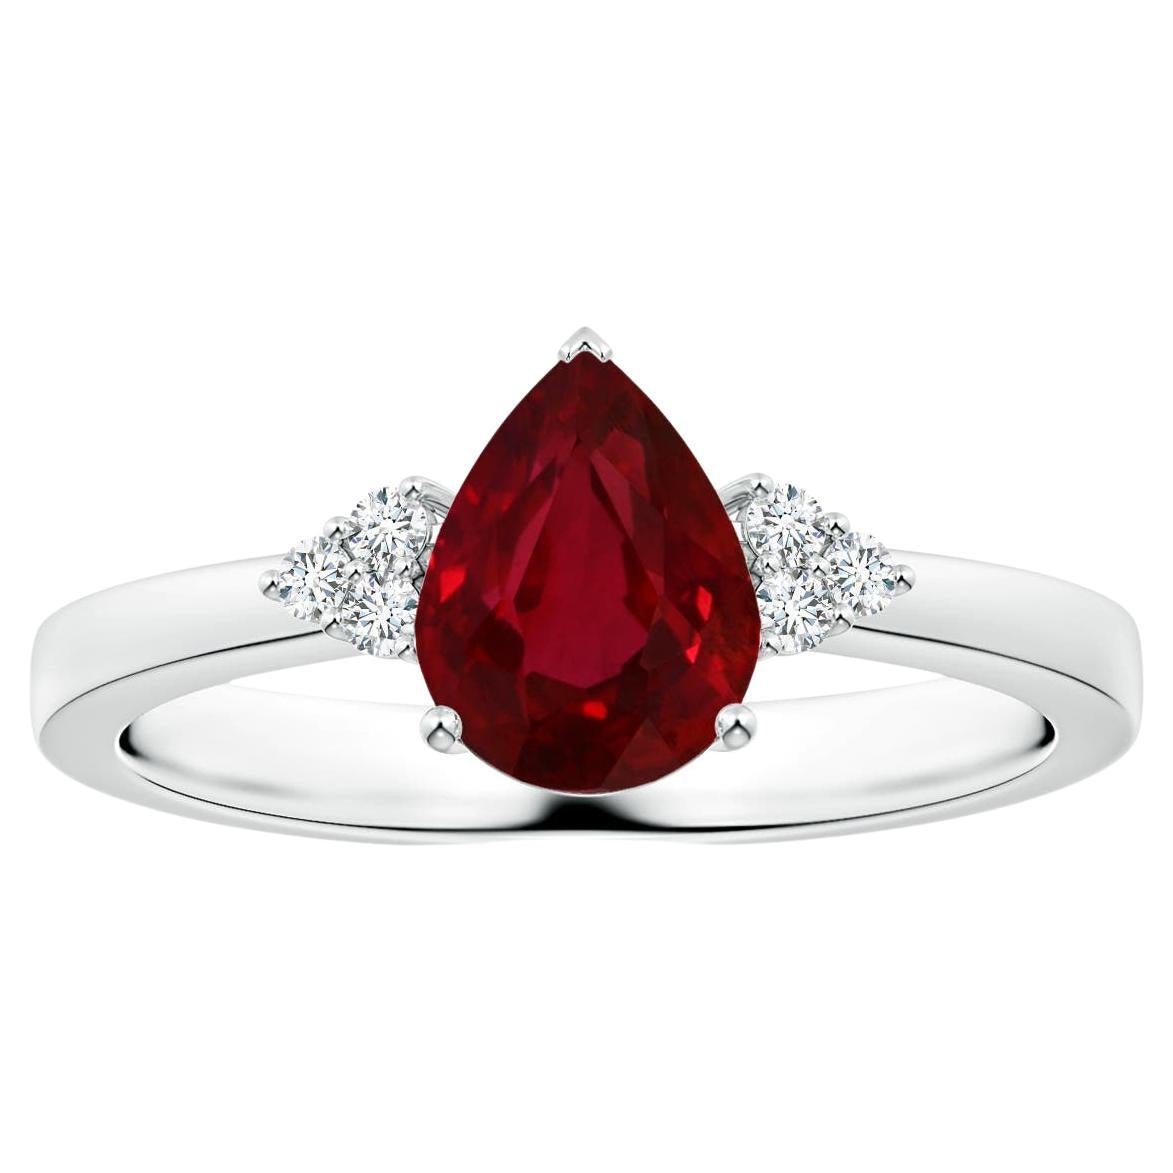 ANGARA Bague en platine avec rubis naturel certifié GIA et diamants